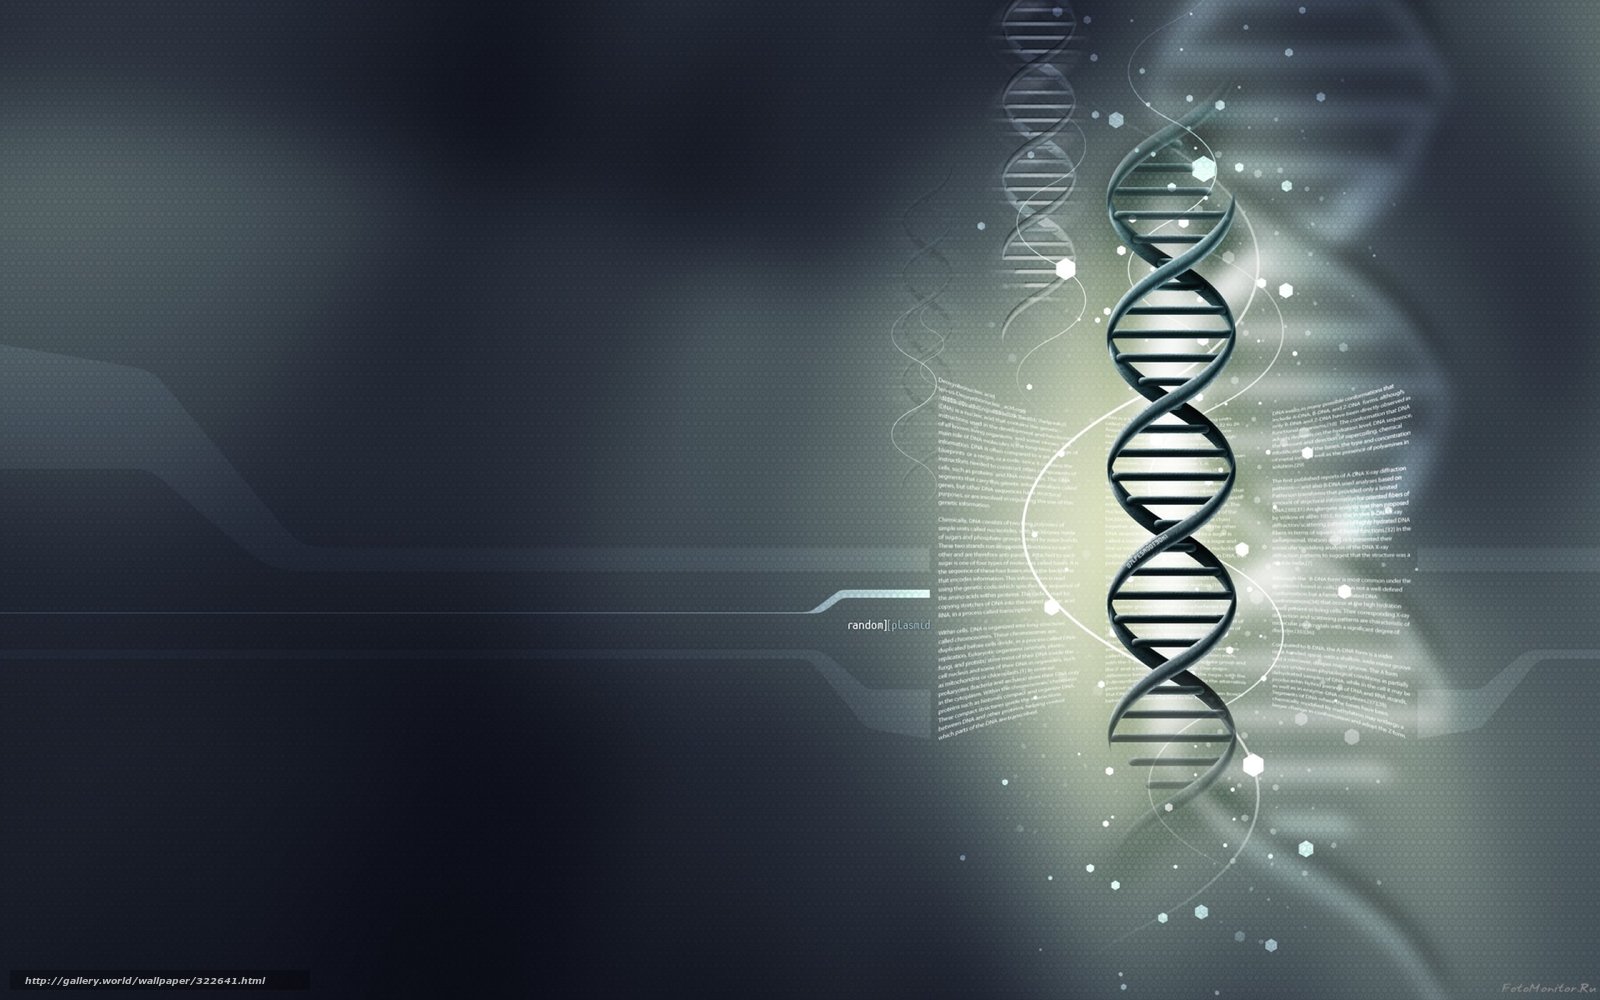 Download wallpaper gray background DNA medical wallpaper genes free